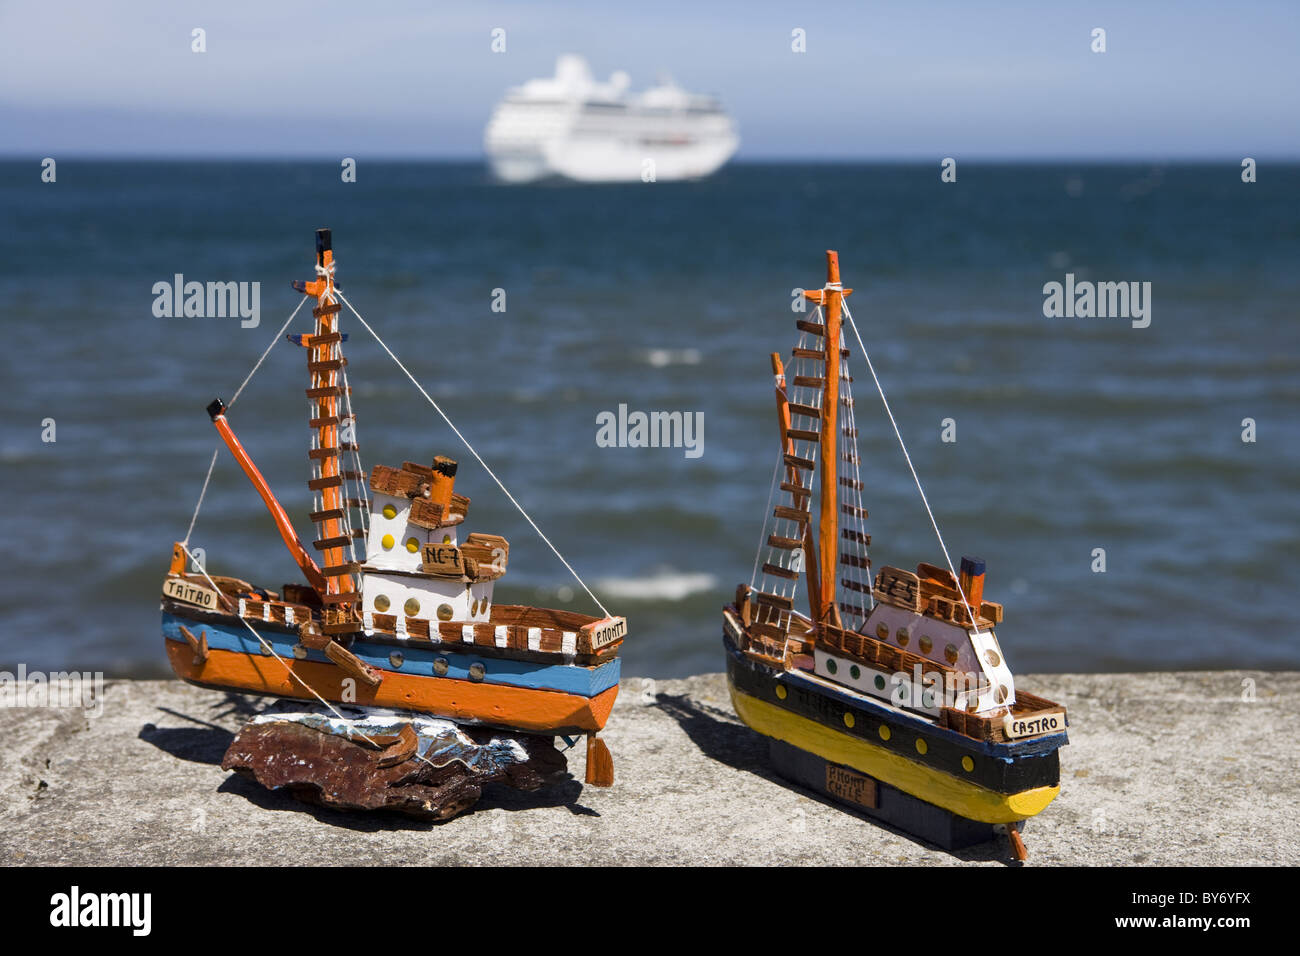 Fishing boat models and cruiseship Insignia (Oceania Cruises) in a